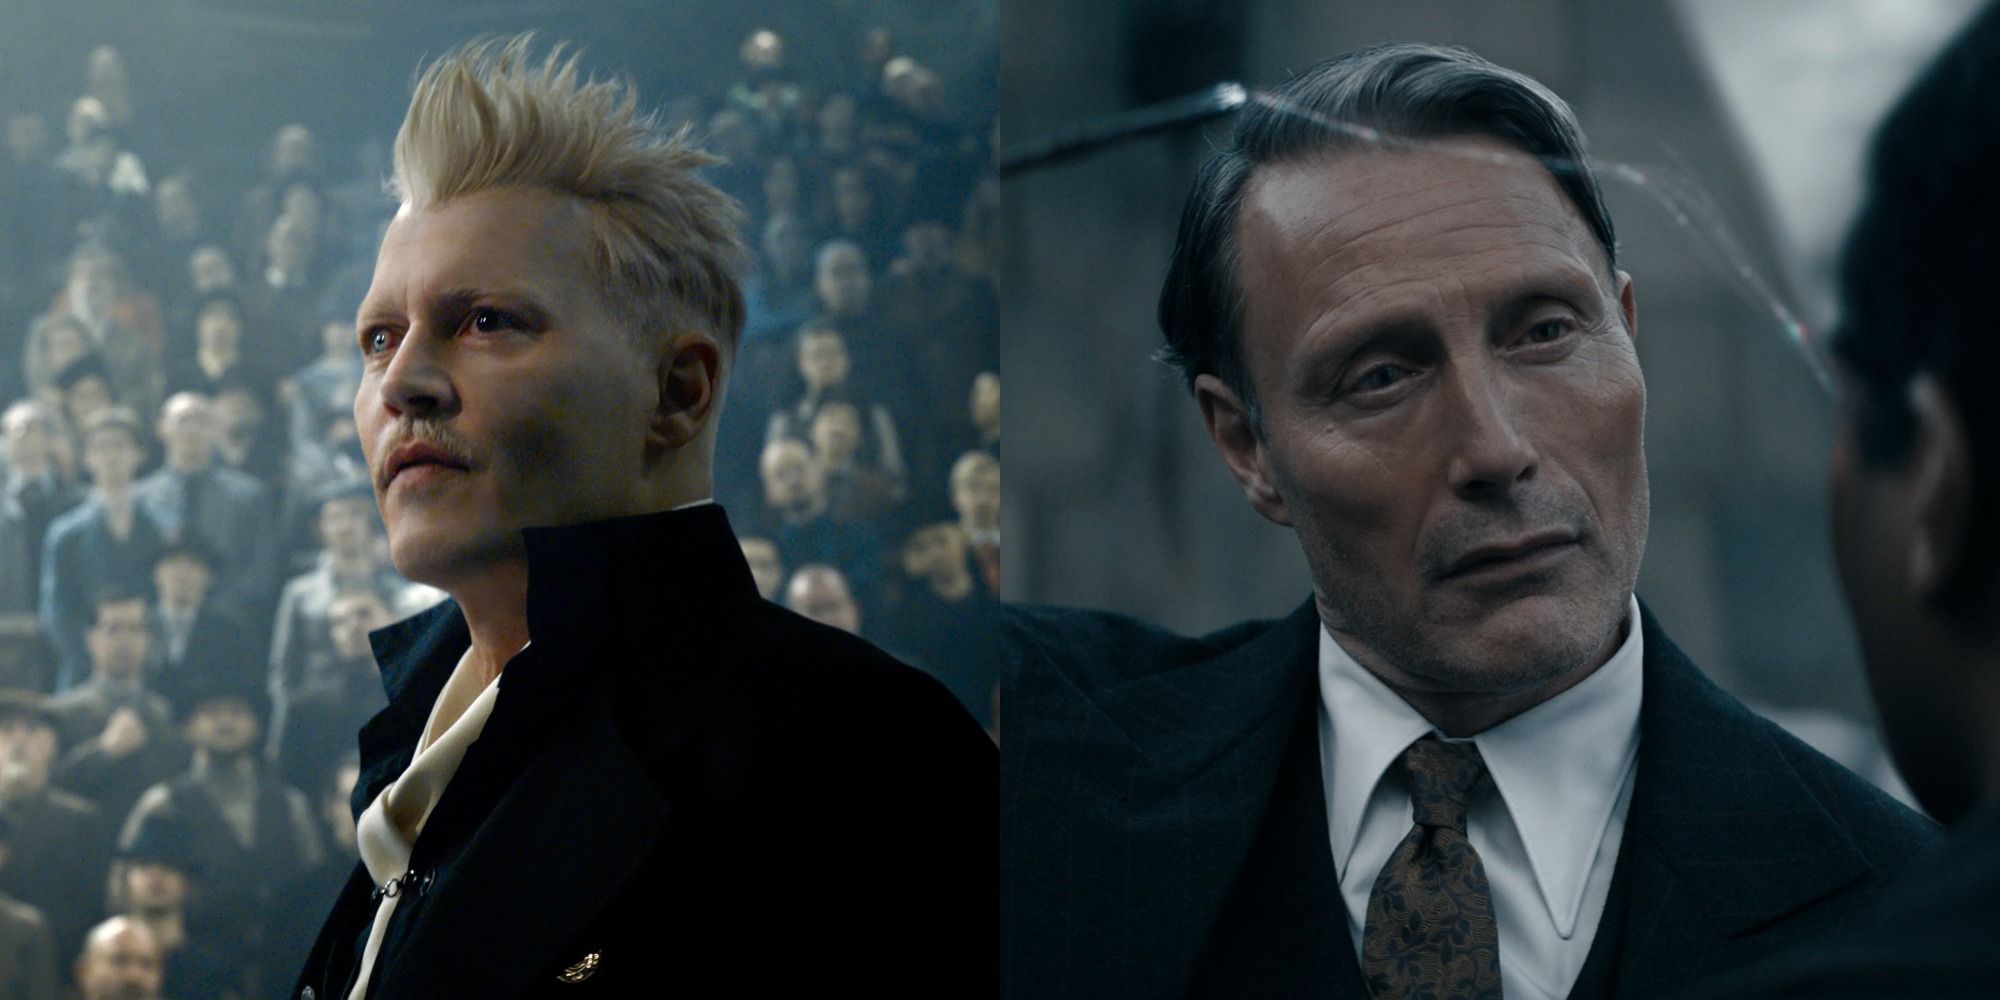 side by side images of Johnny Depp and Mads Mikkelsen as Grindelwald in the Fantastic Beasts films